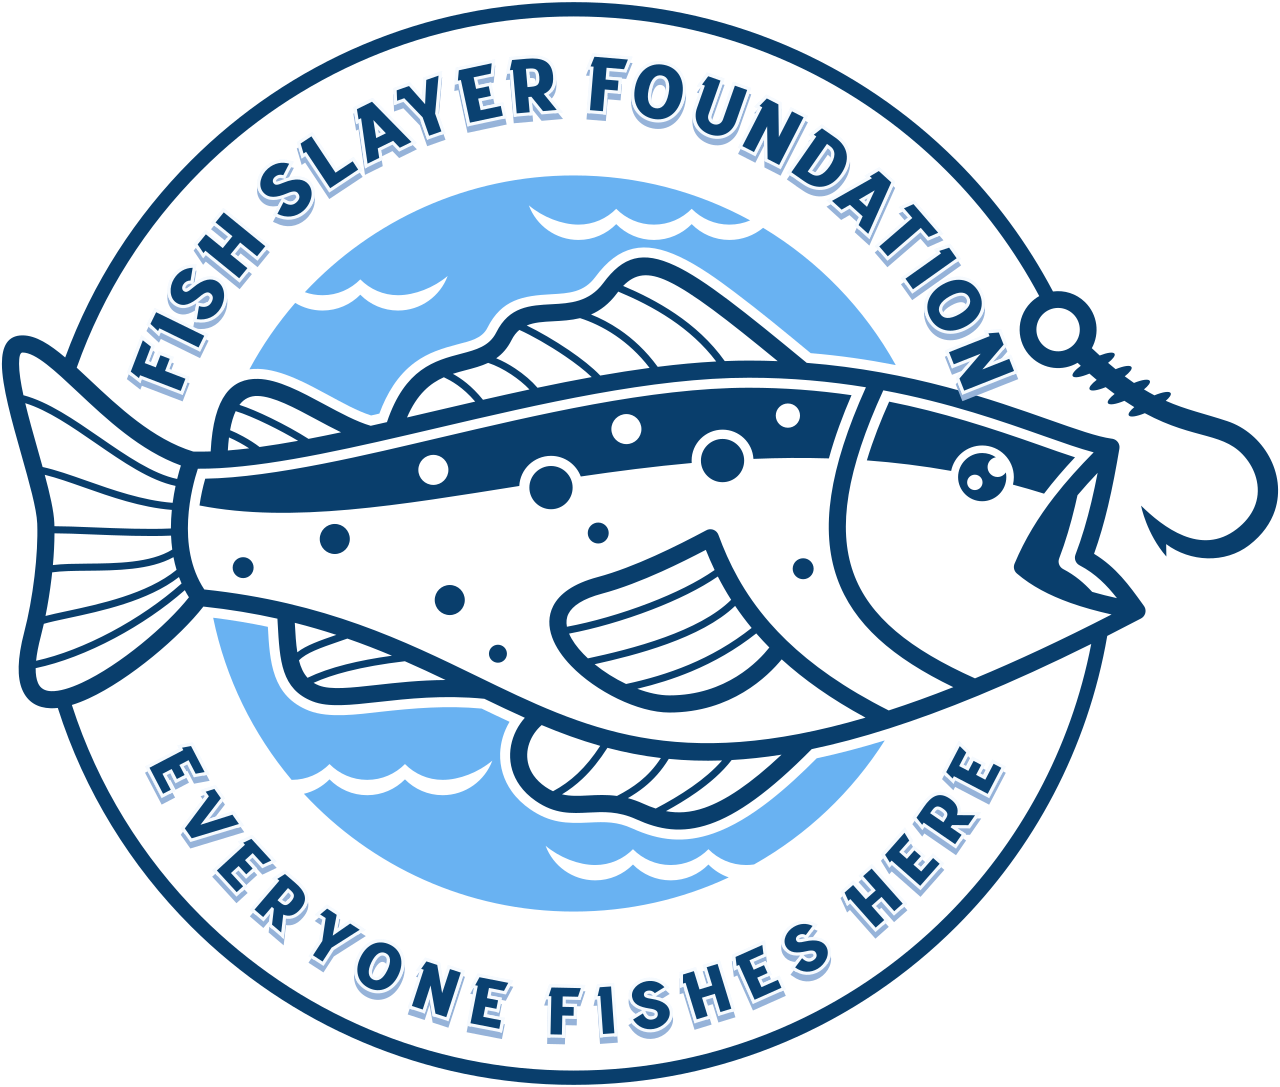 Fish Slayer Foundation